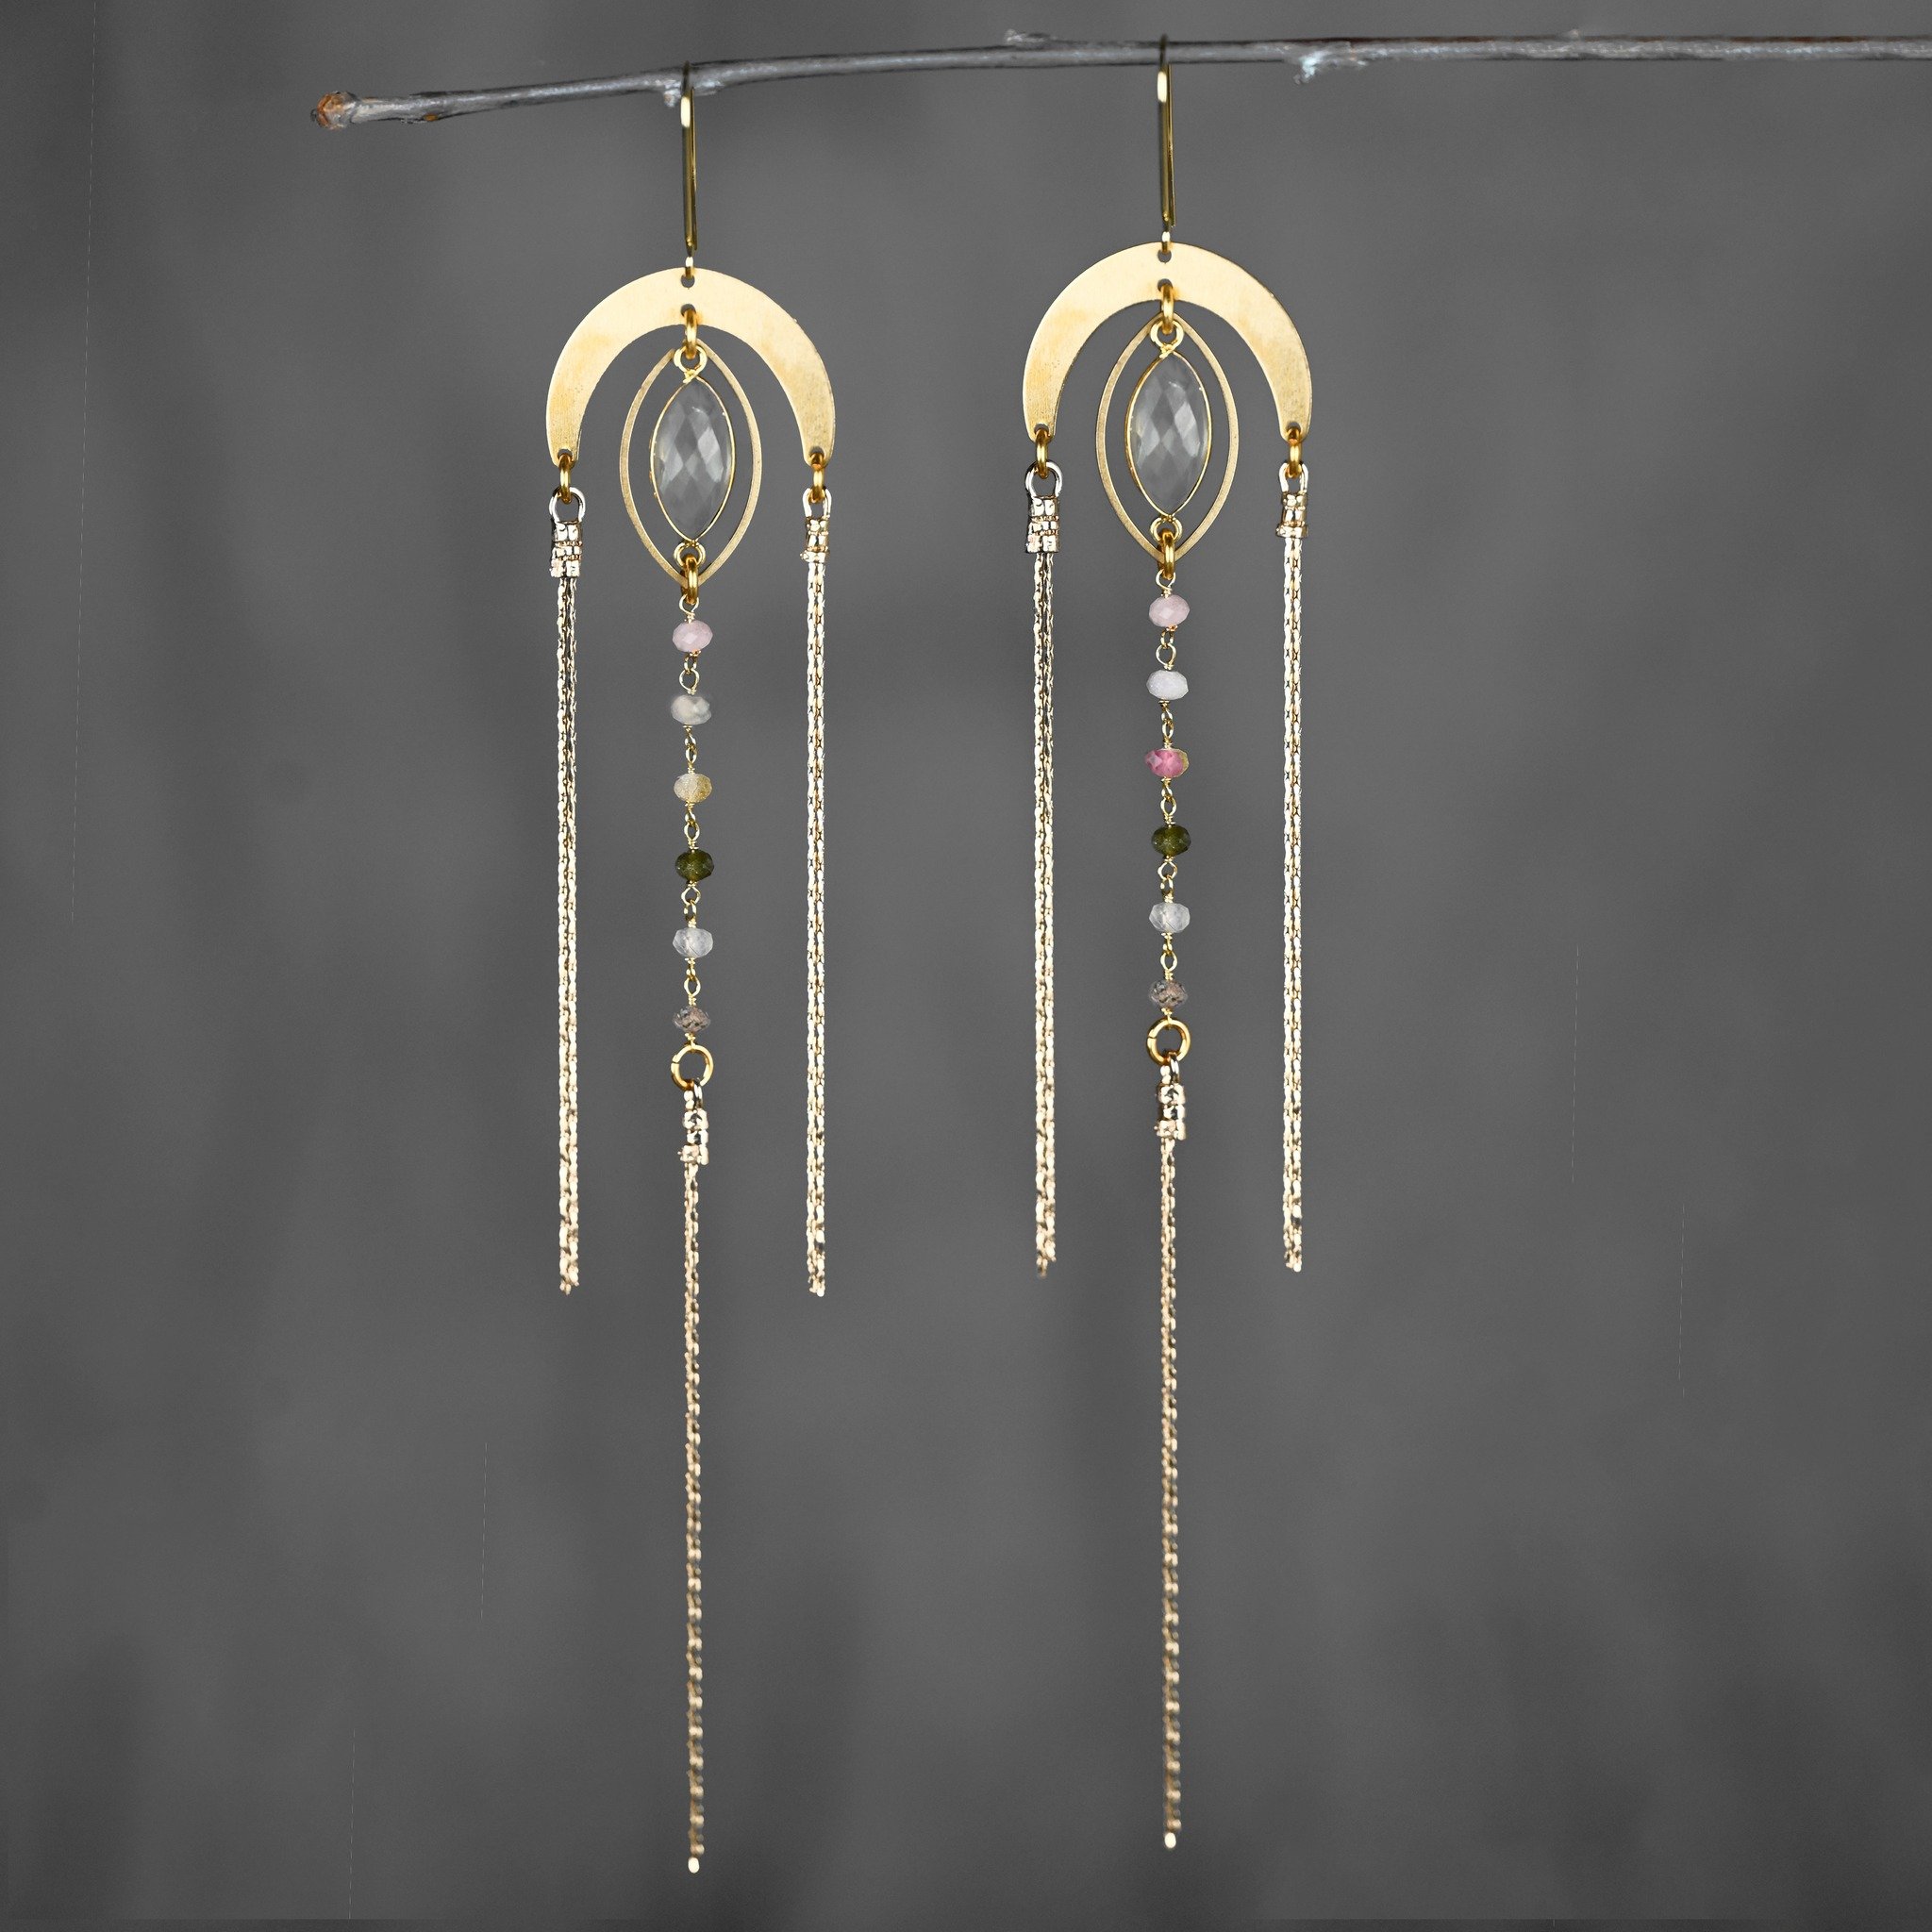 Goddess Earrings anyone?

Handmade With Art &amp; Soul 💜